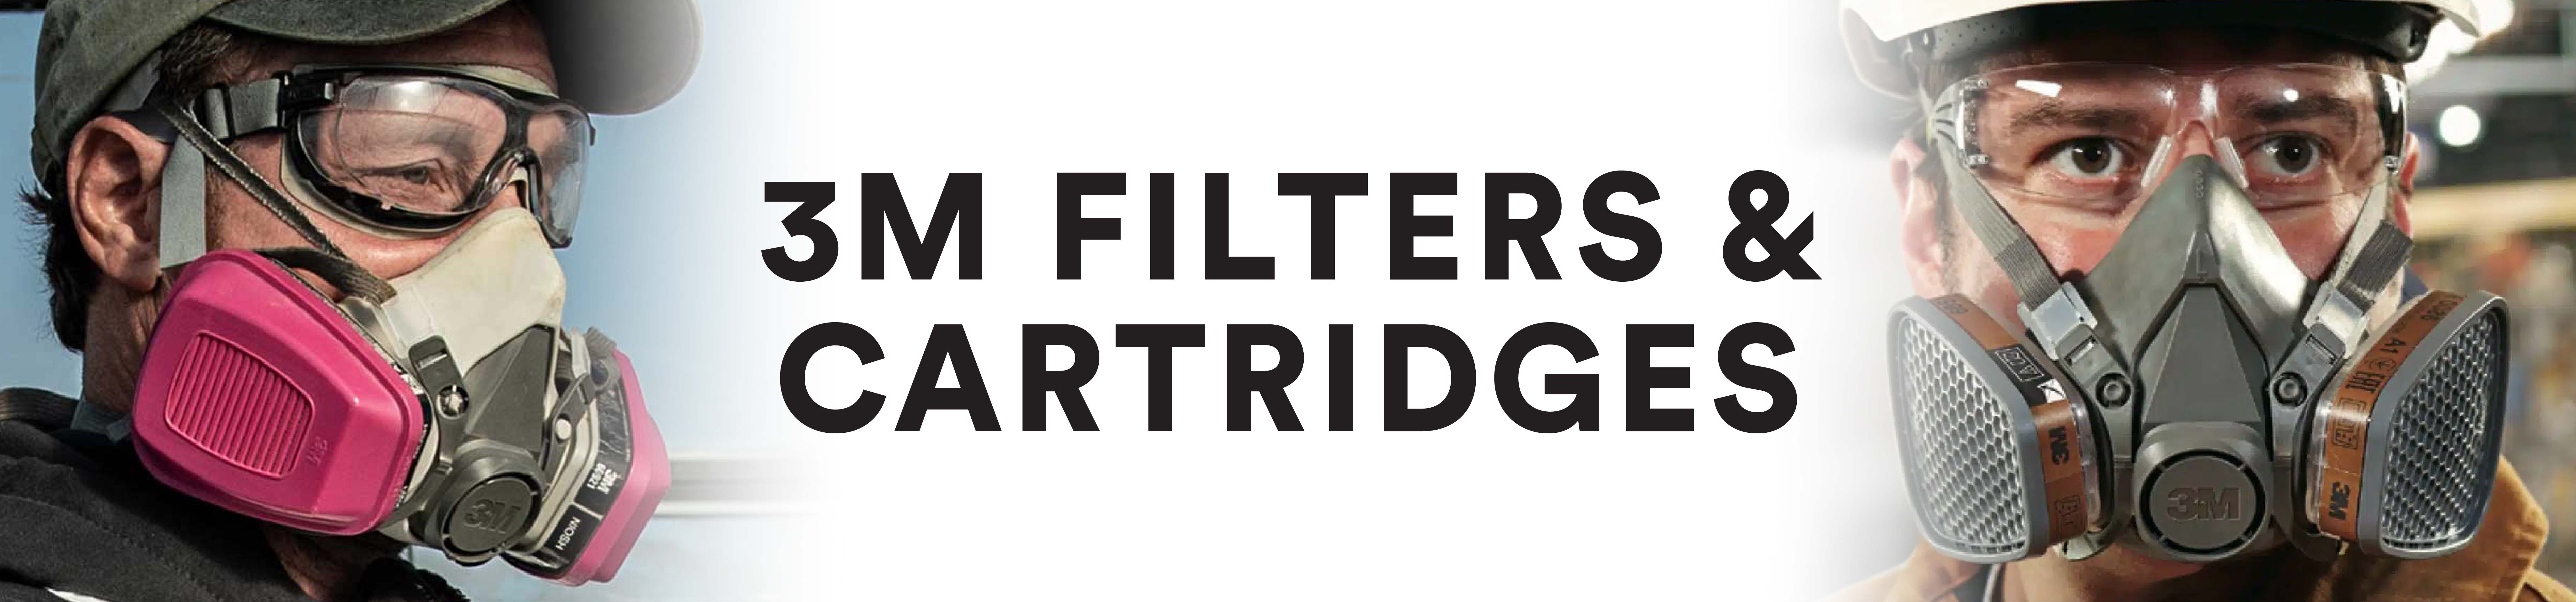 3M Filters & Cartridges